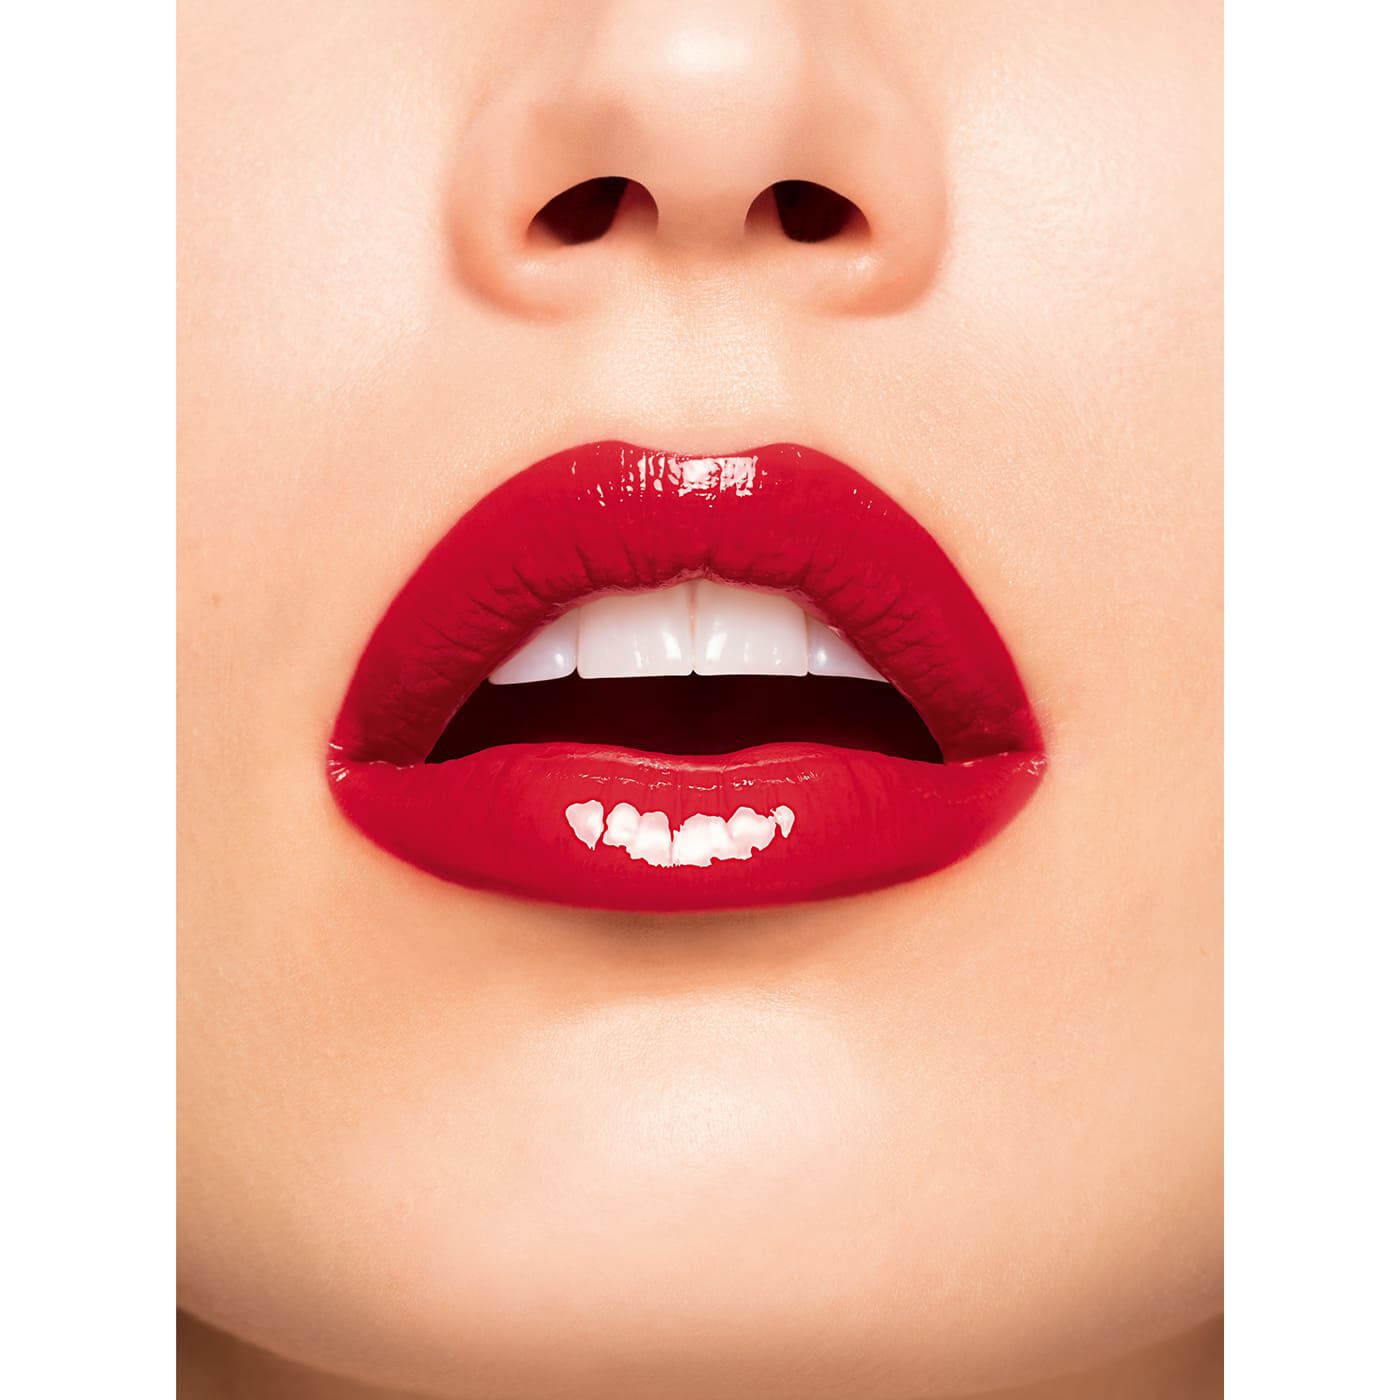 Joli Rouge Lacquer Lipstick 3 Gr